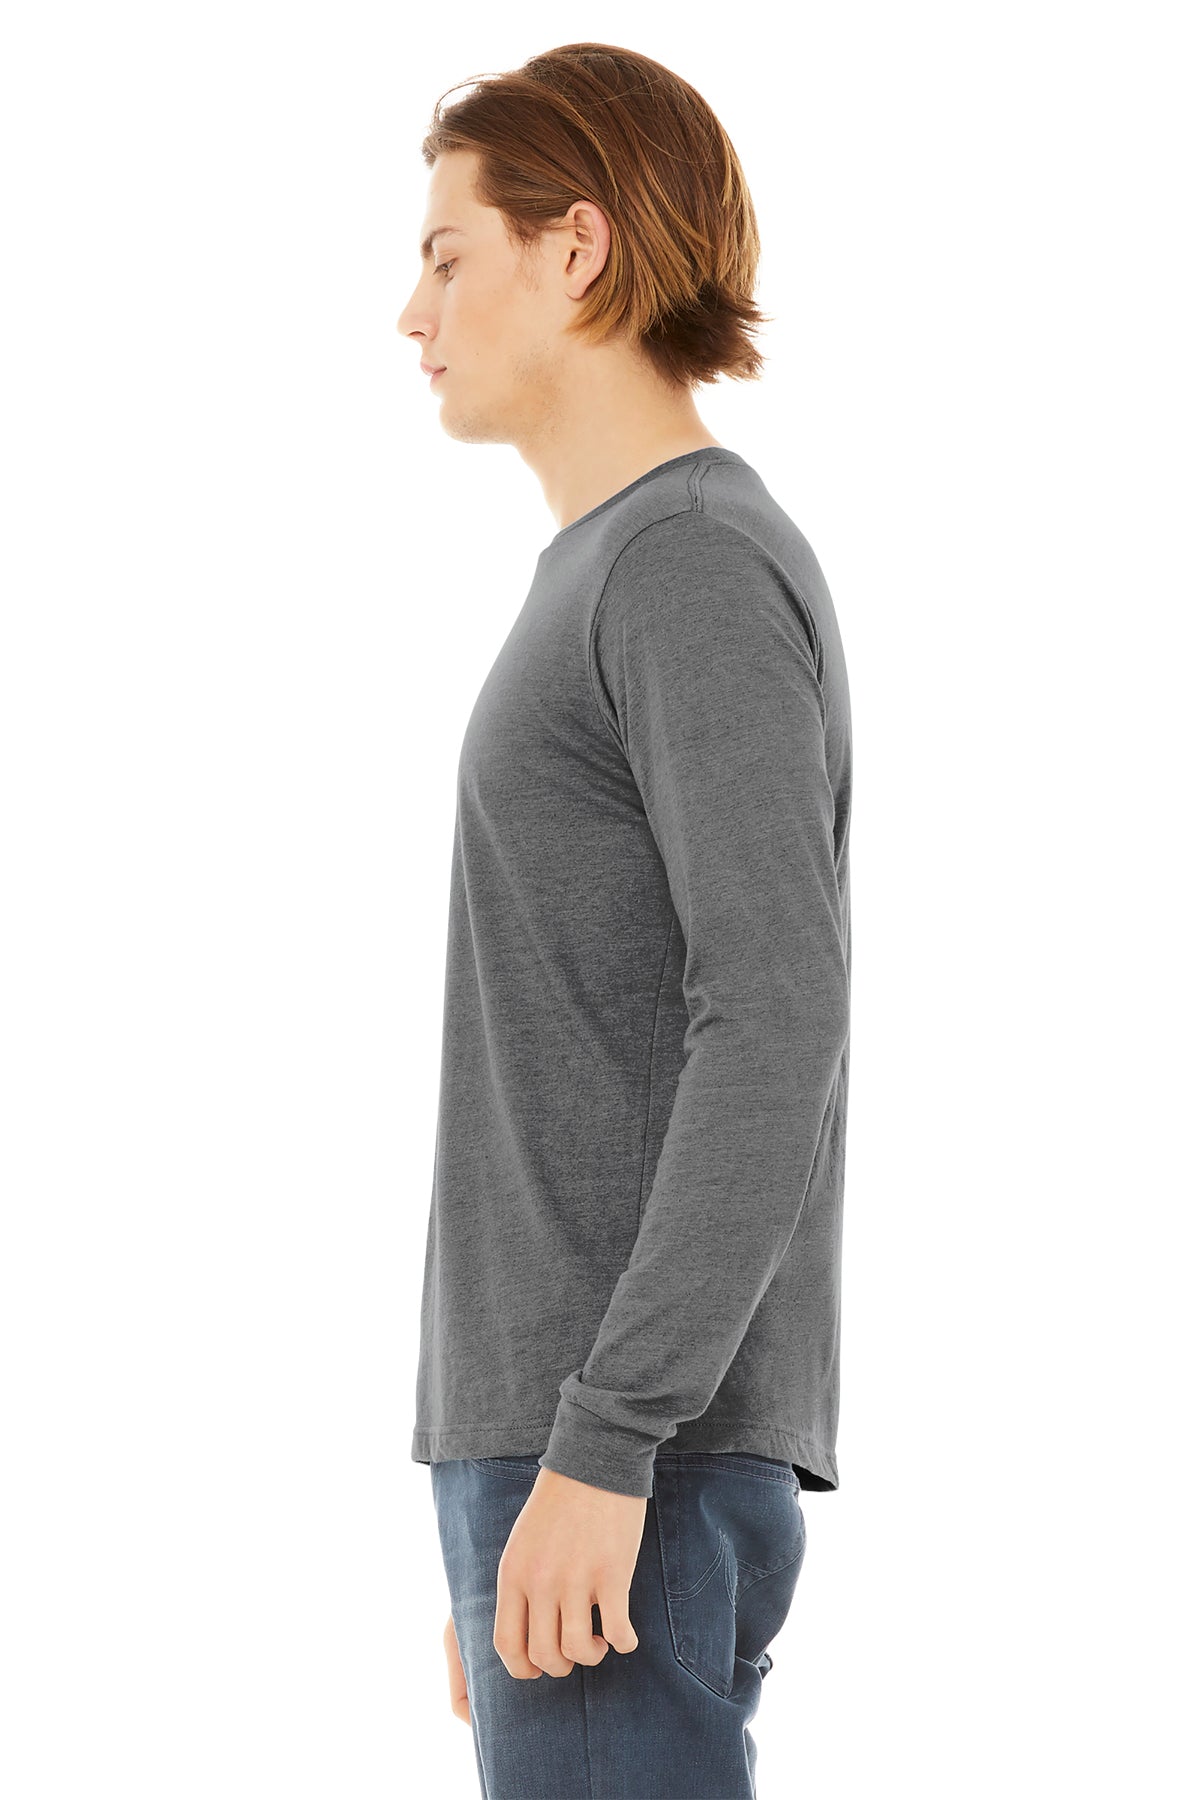 Bella Canvas Unisex Triblend Long Sleeve T-Shirt, Grey